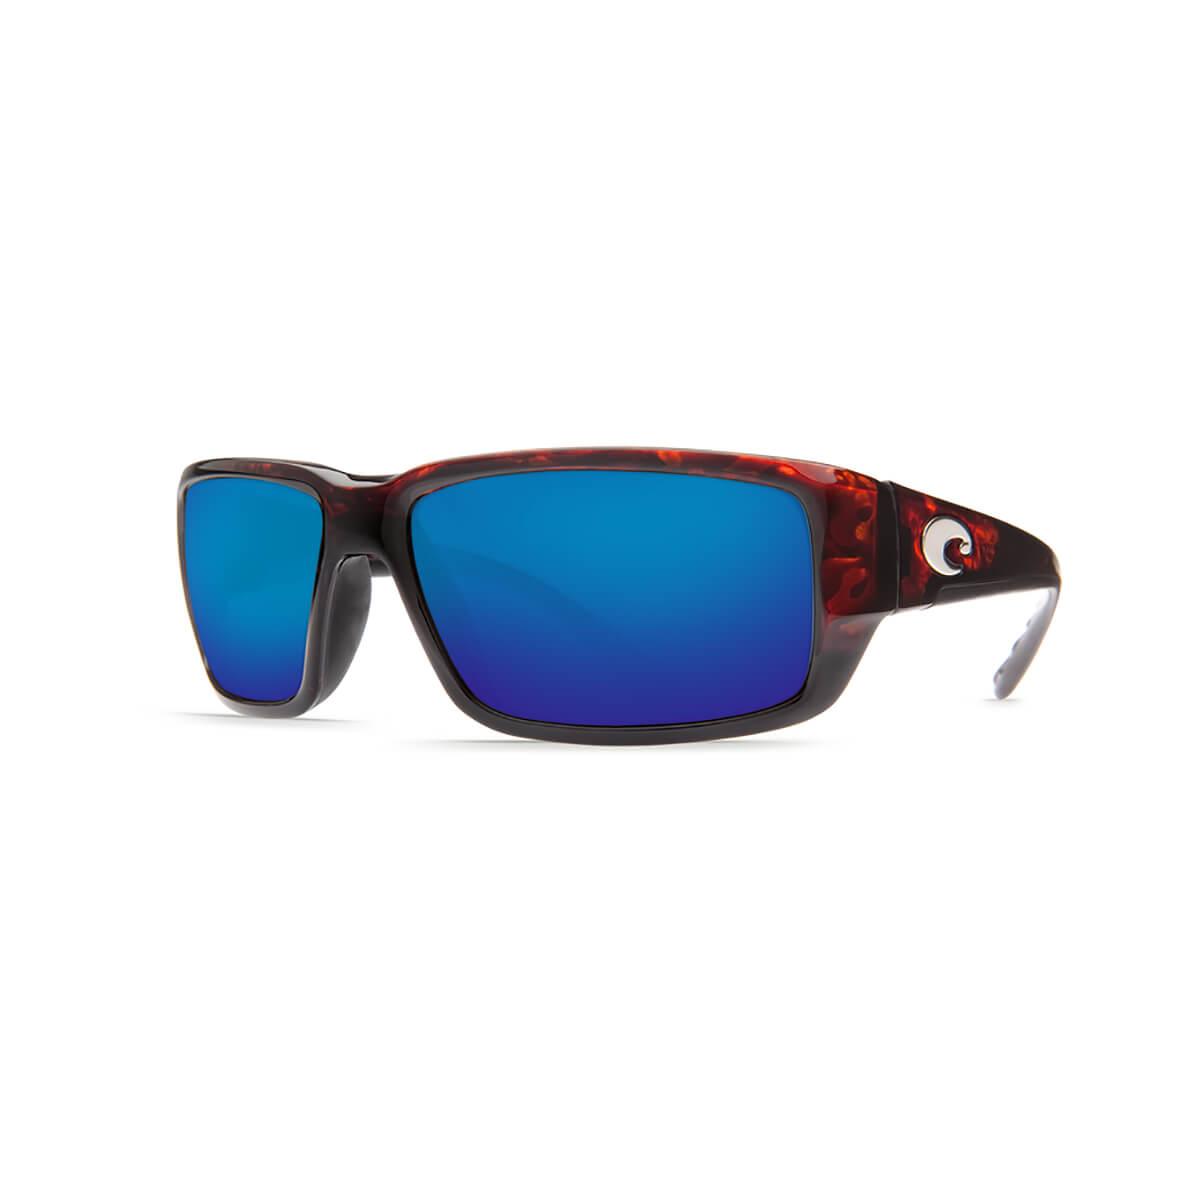  Fantail 580p Sunglasses - Polarized Plastic